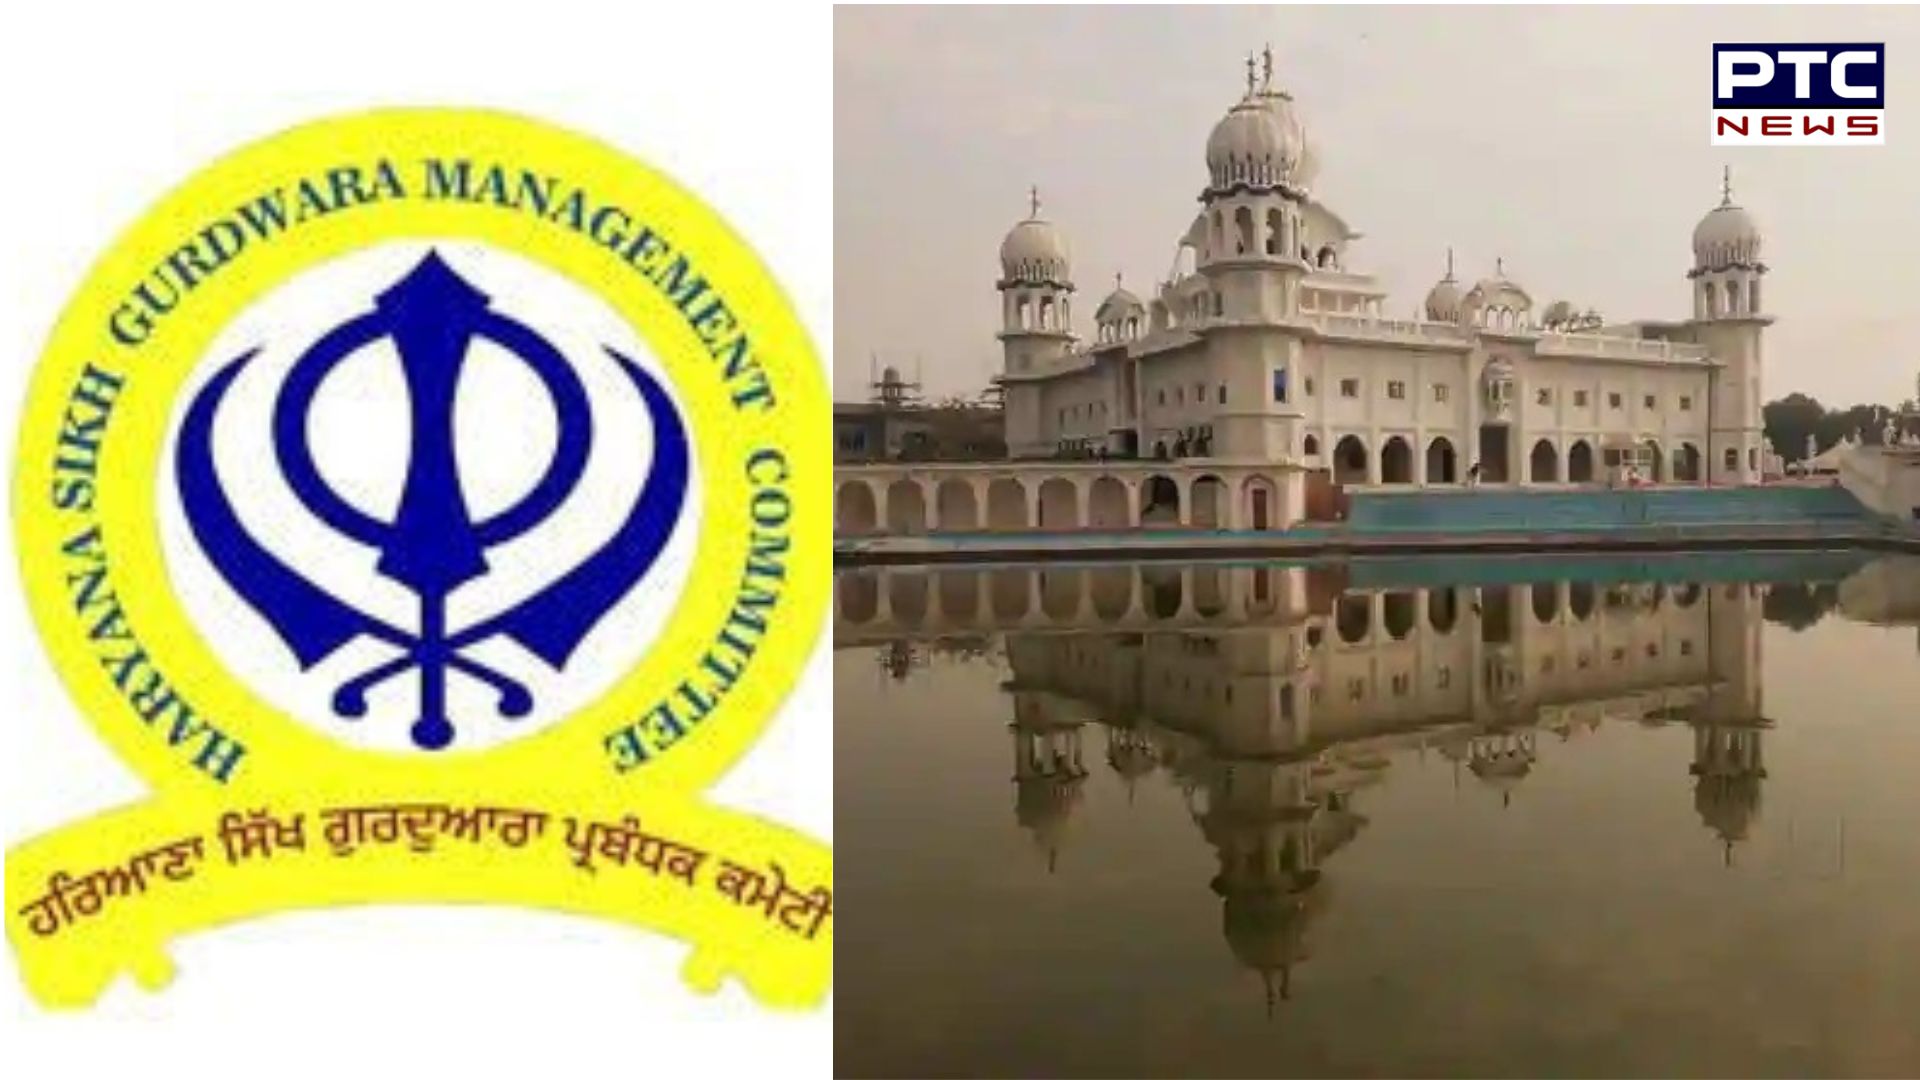 Haryana Sikh Gurdwara Parbandhak Committee election schedule withdrawn; know why